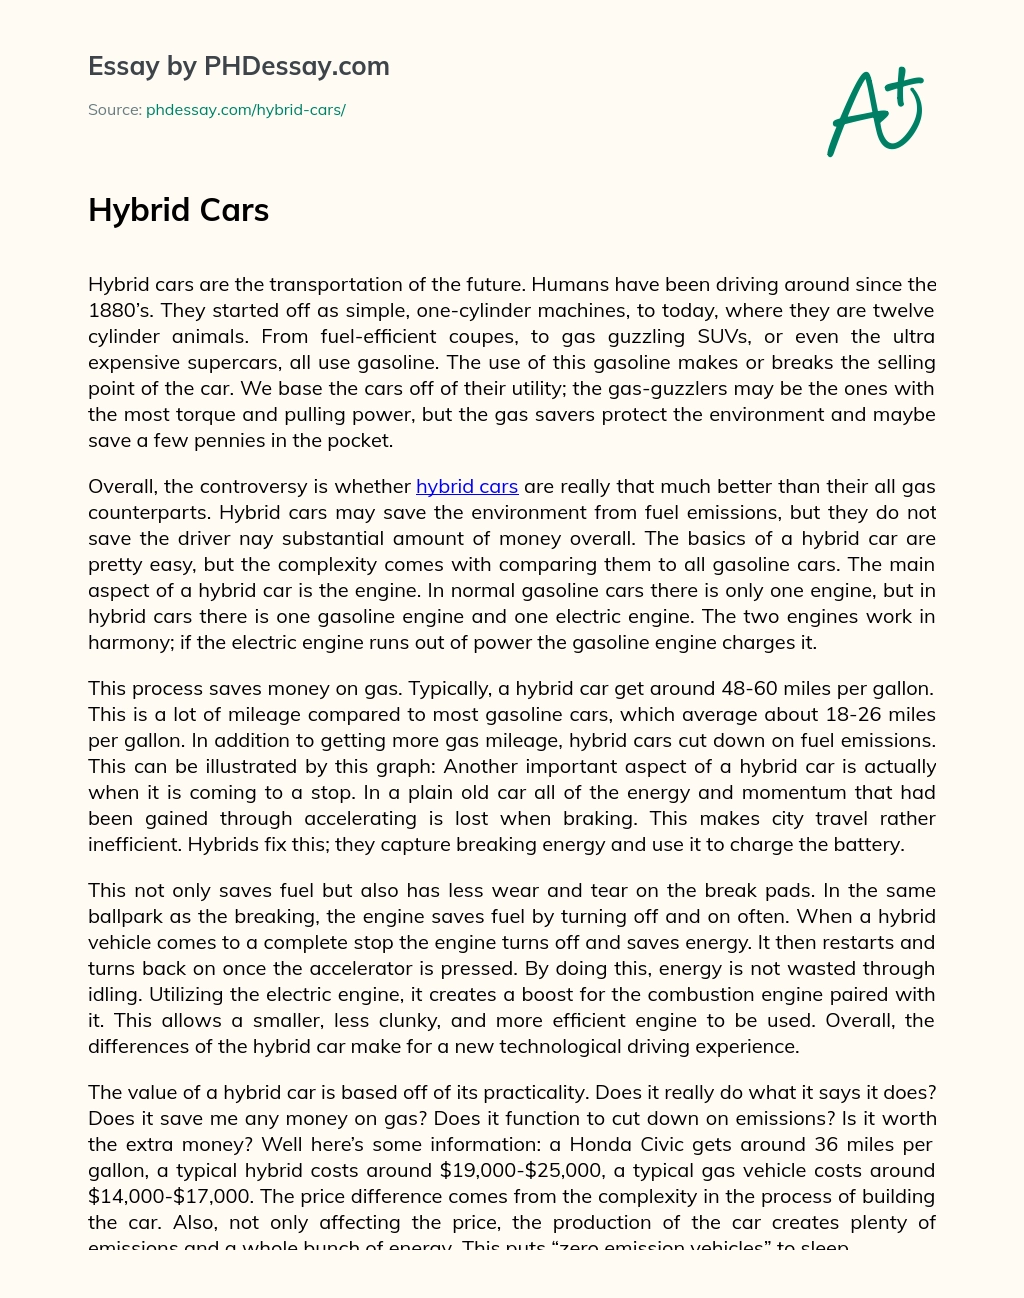 Hybrid Cars: The Future of Transportation essay